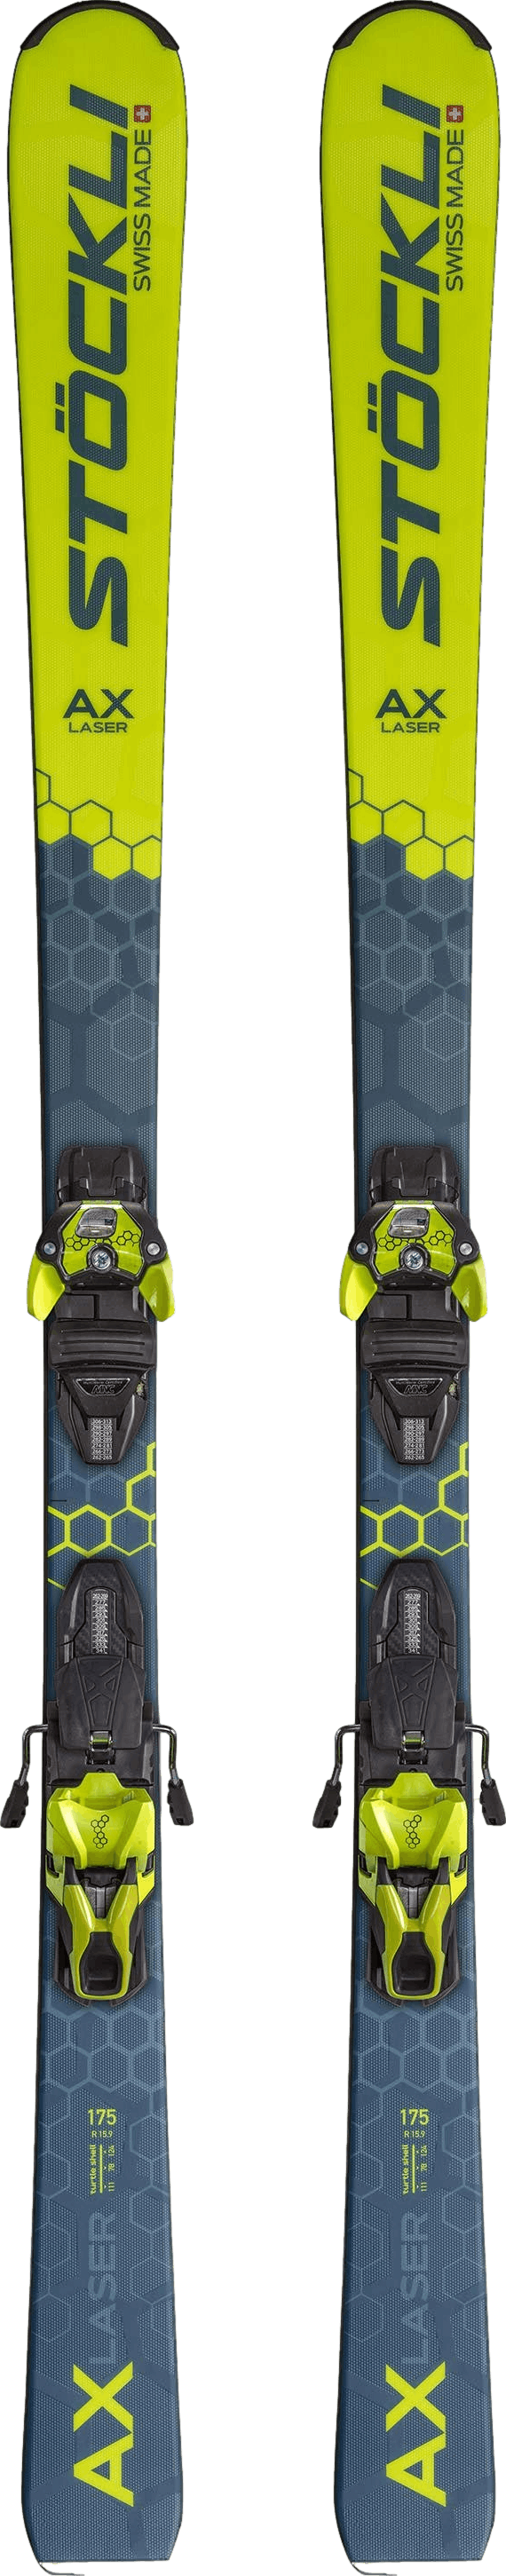 Stockli Stockli Laser AX Skis W Dxm 13 Bindings  · 2021 · 168 cm